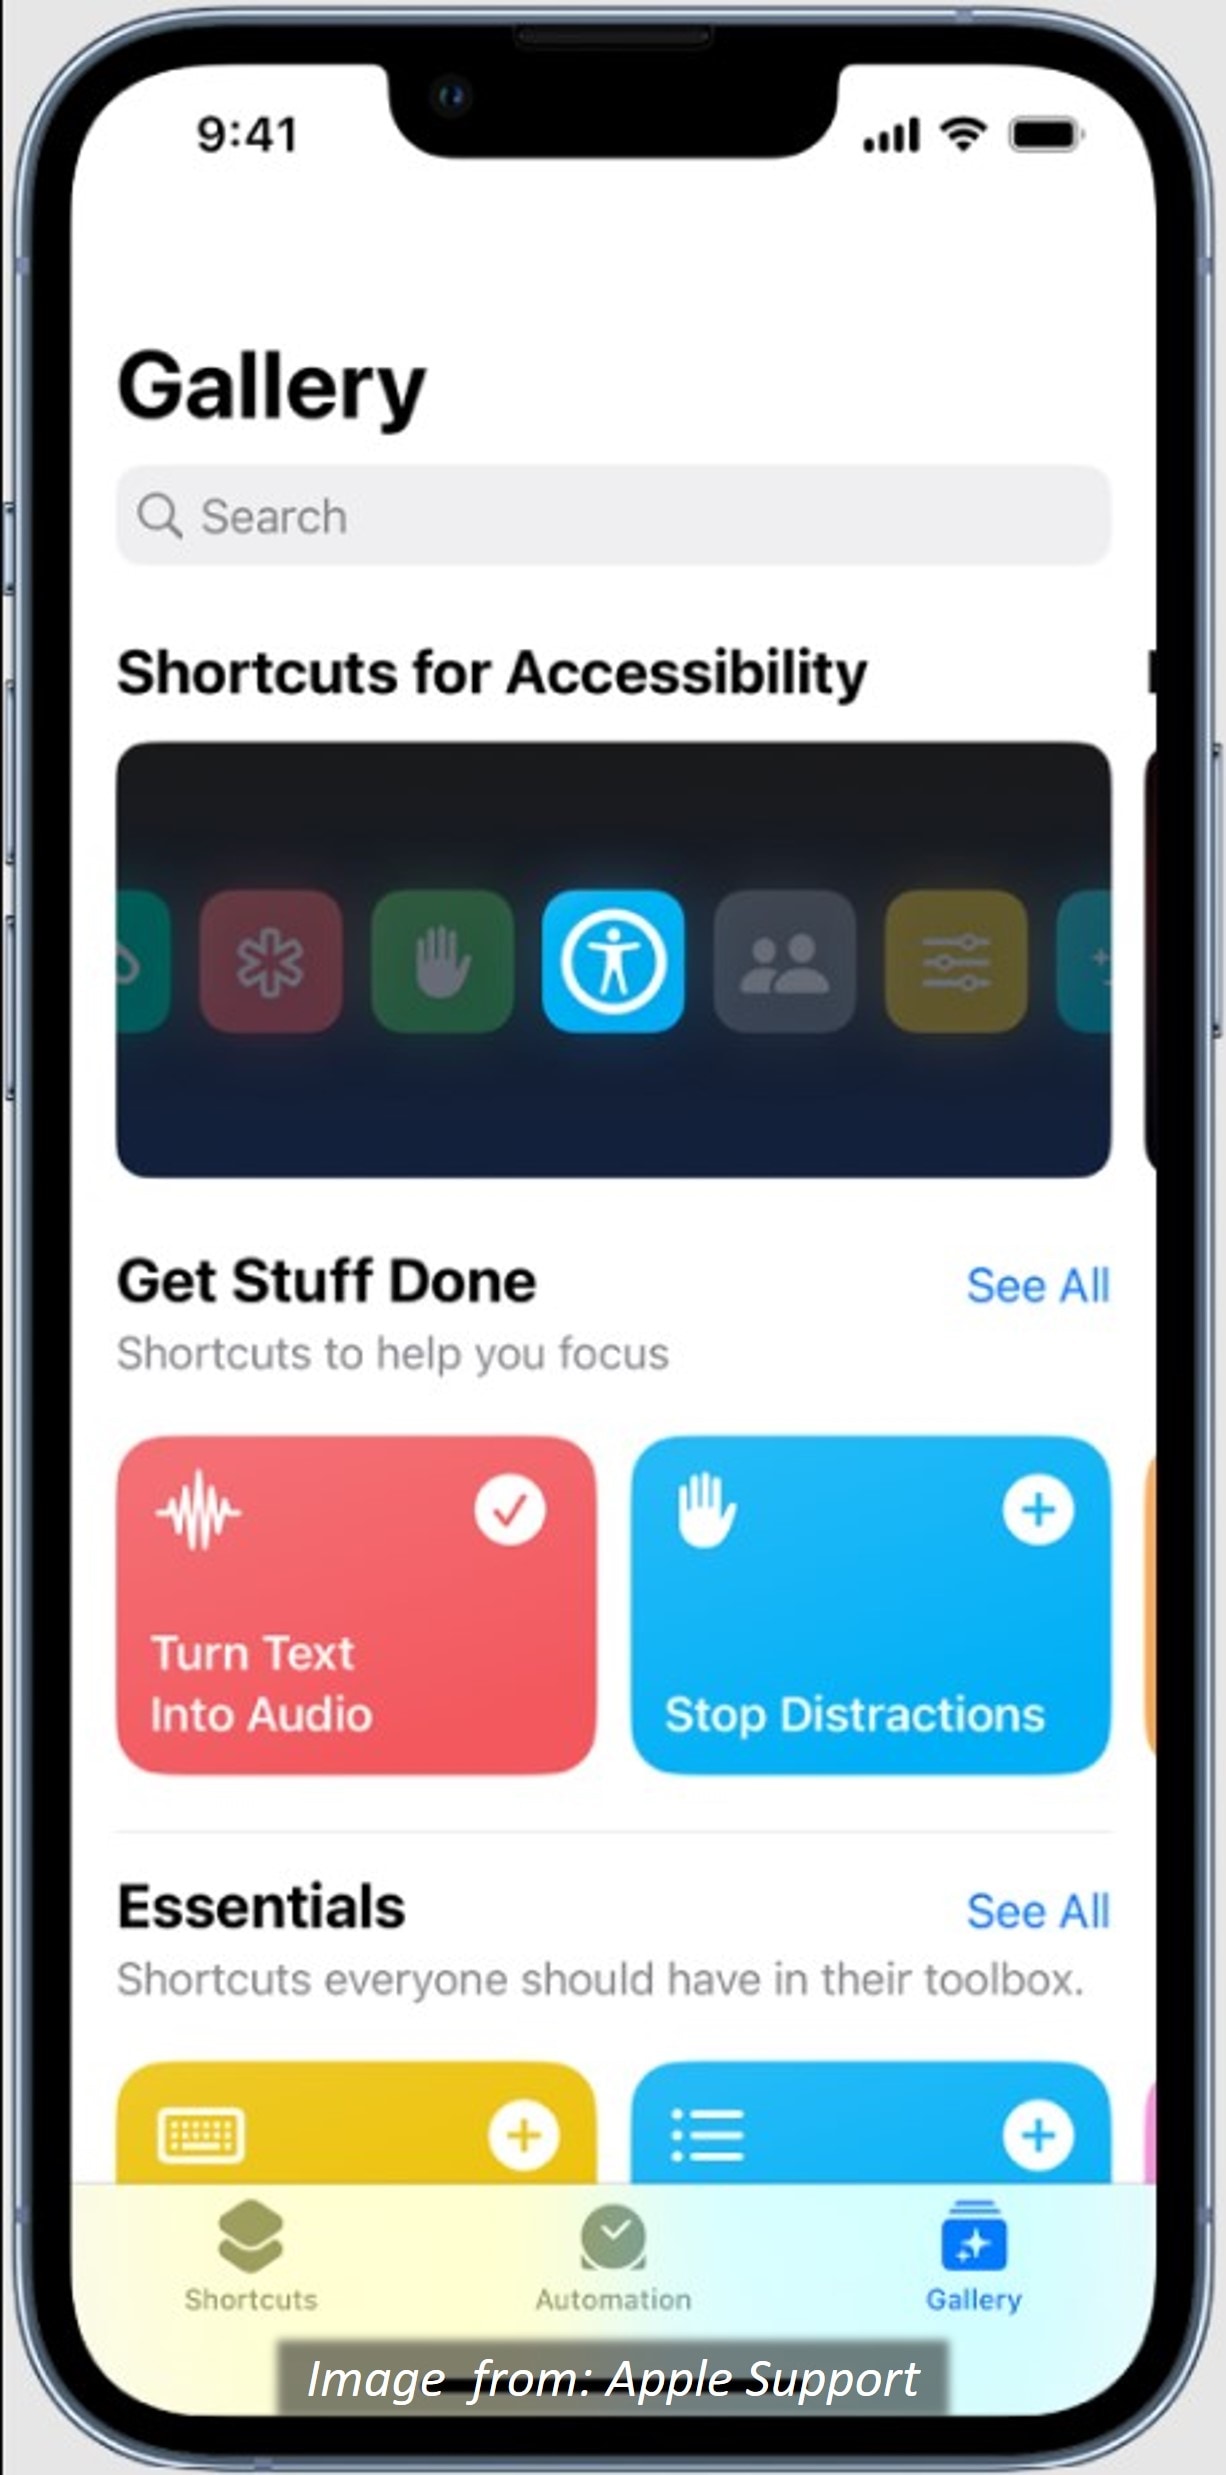 iphone shortcuts app gallery